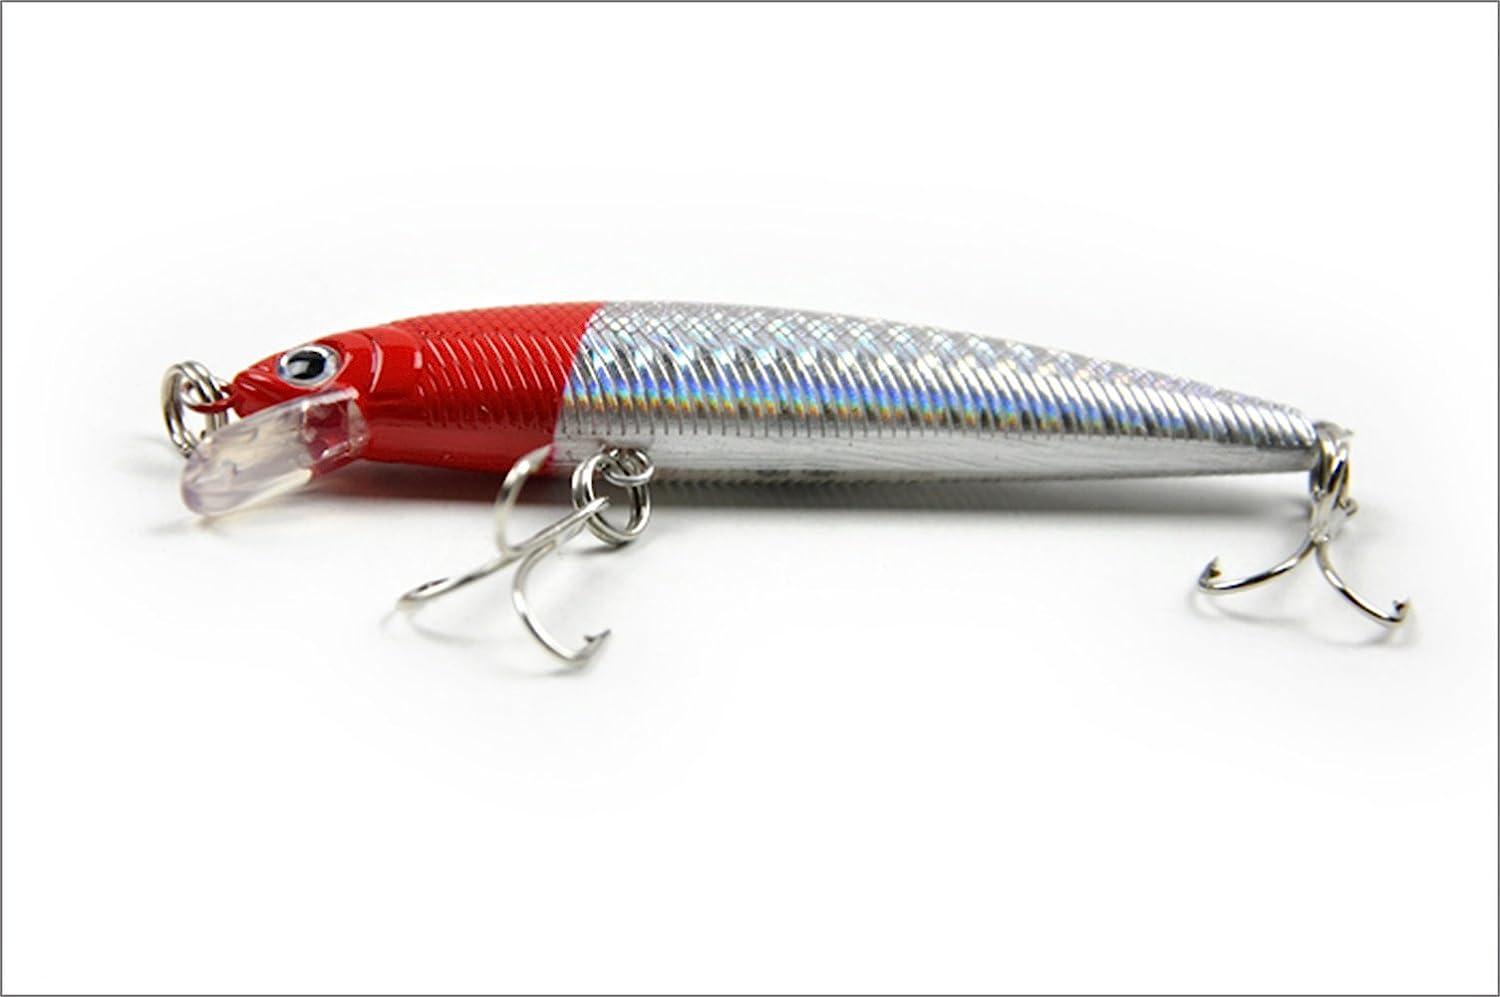 Hetkrishi Silver Spoons Lure - (9pcs) Hard Fishing Lures Treble Hooks Metal  Fishing Lure Baits Fishing Accessories